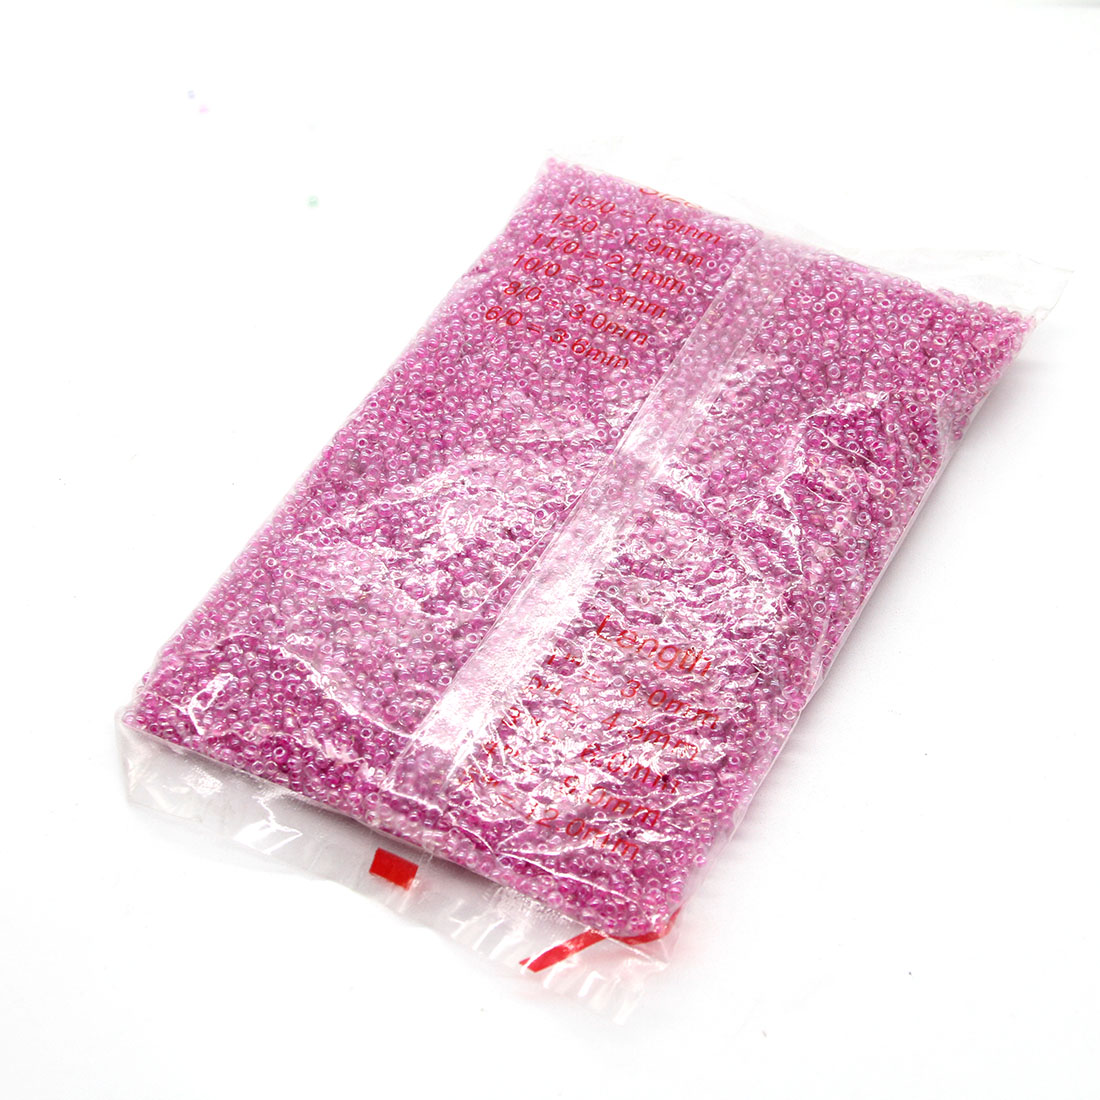 Pink 2mm 30,000 packs